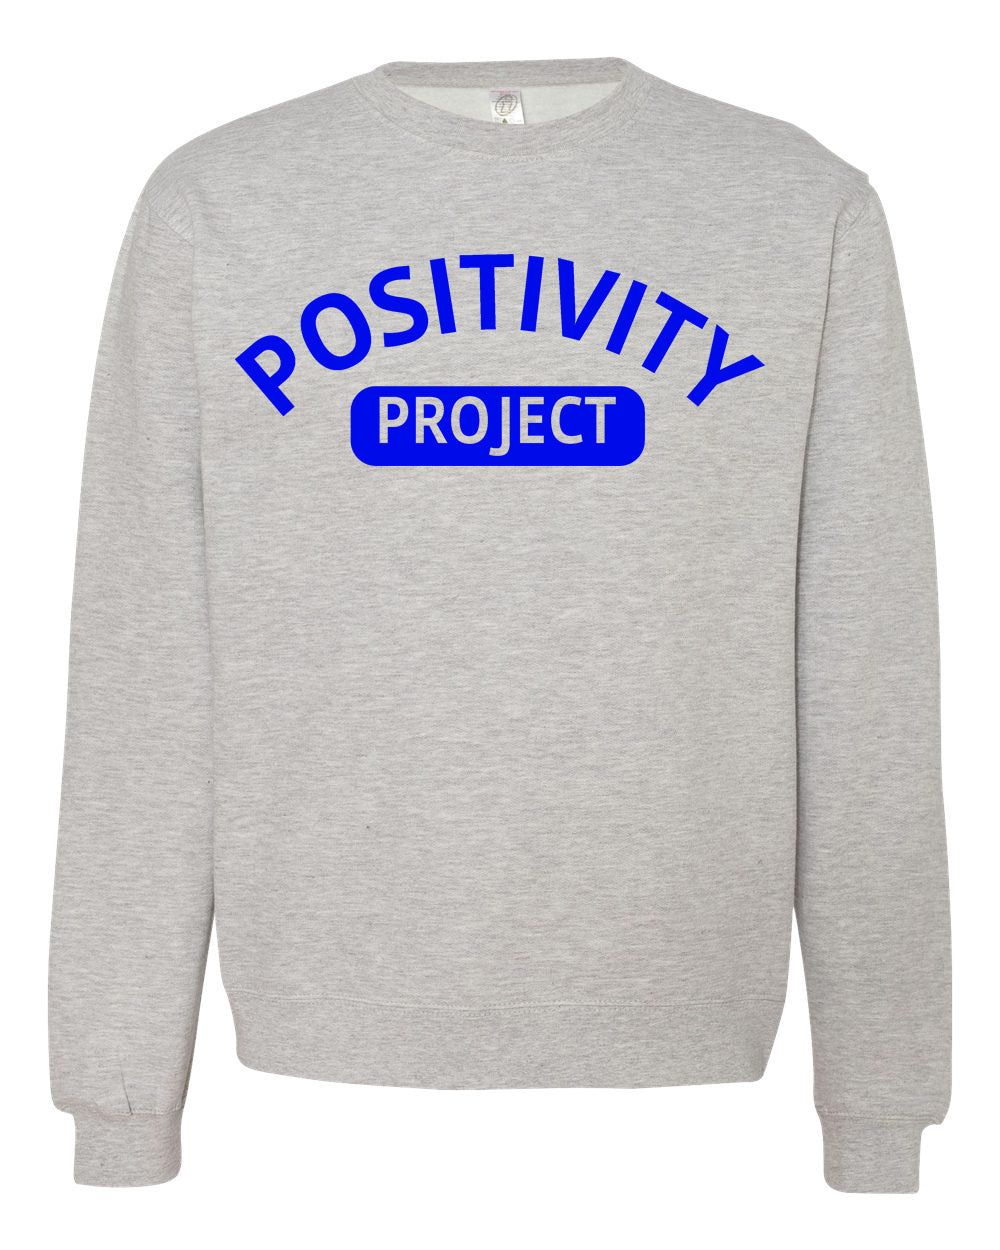 Positivity Project Crew